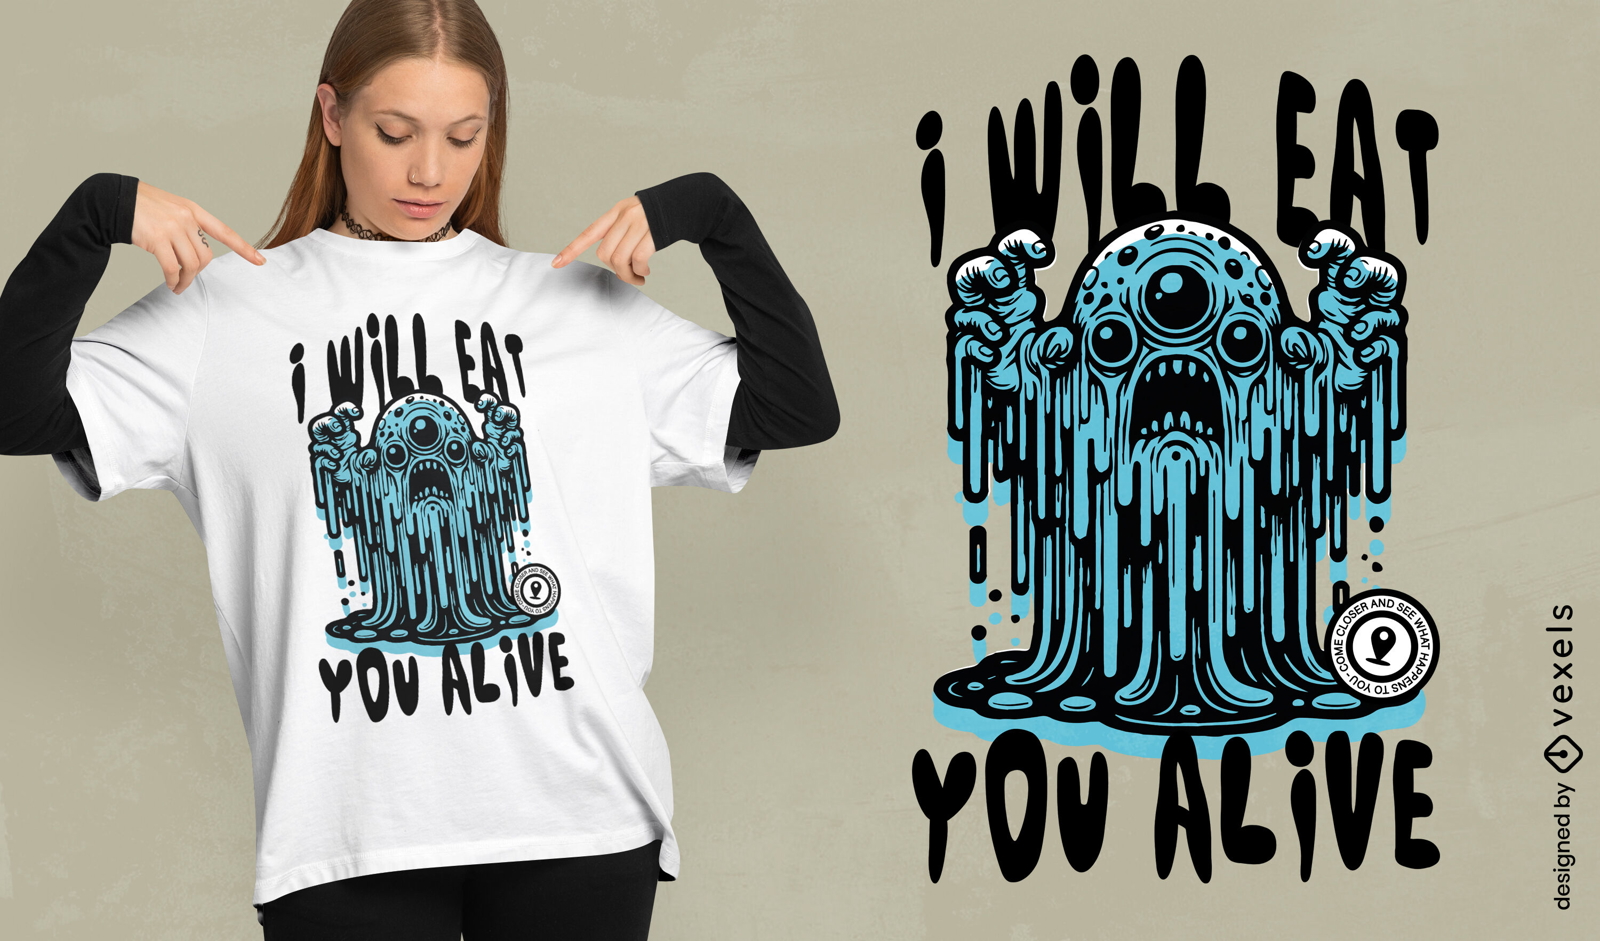 Gruseliges, bedrohliches Monster-T-Shirt-Design